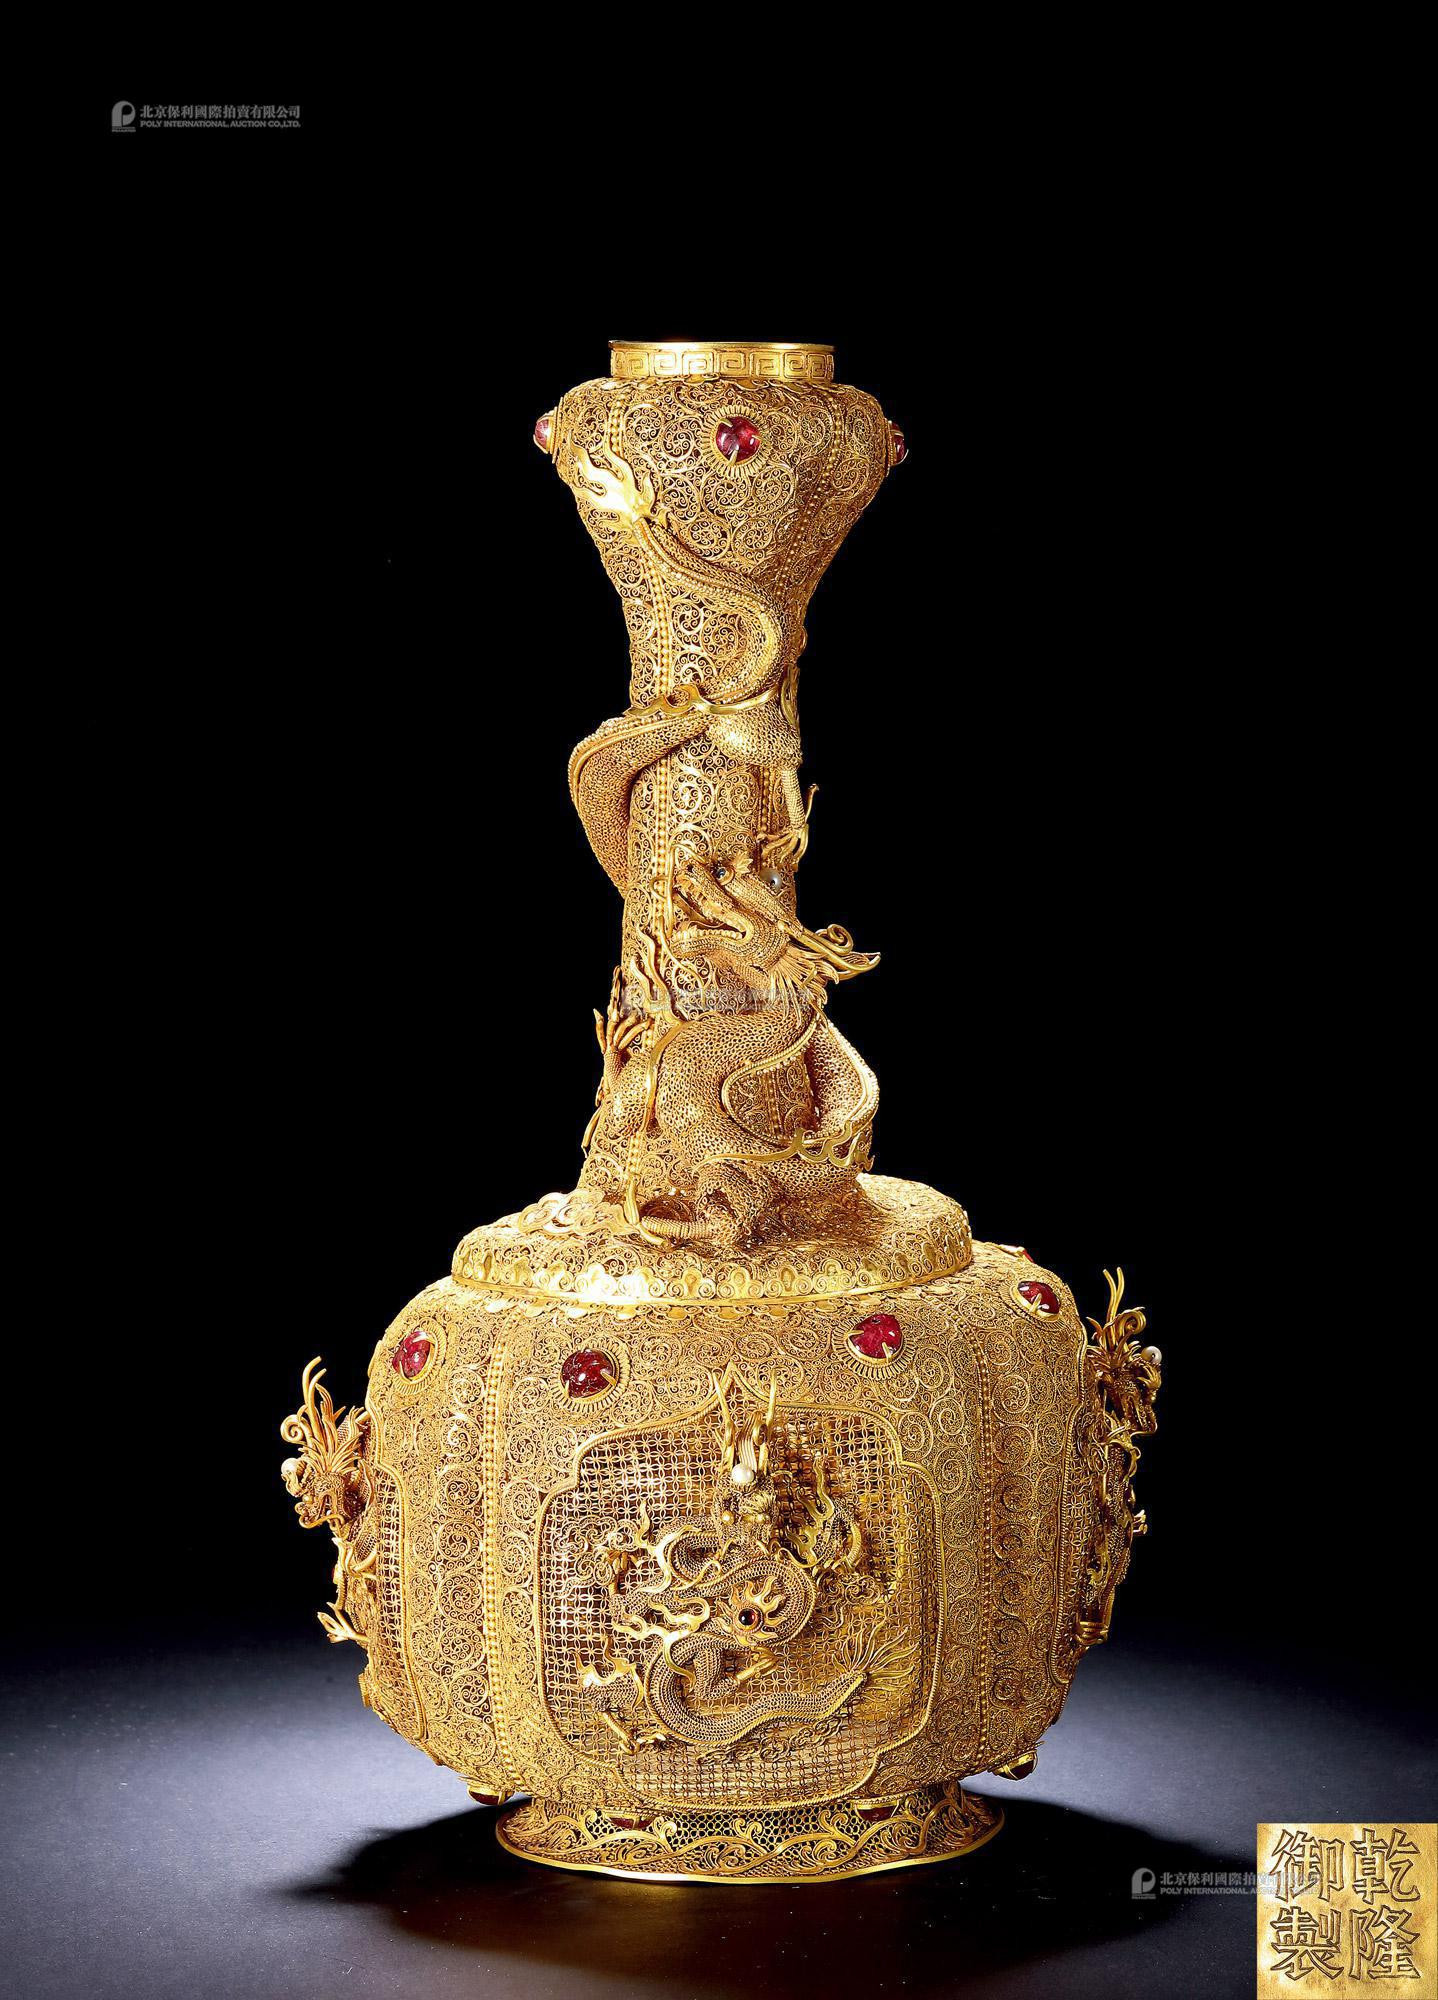 AN IMPERIAL GOLD INLAID RUBY‘DRAGON AND BALLS’ GARLIC-HEAD CENSER